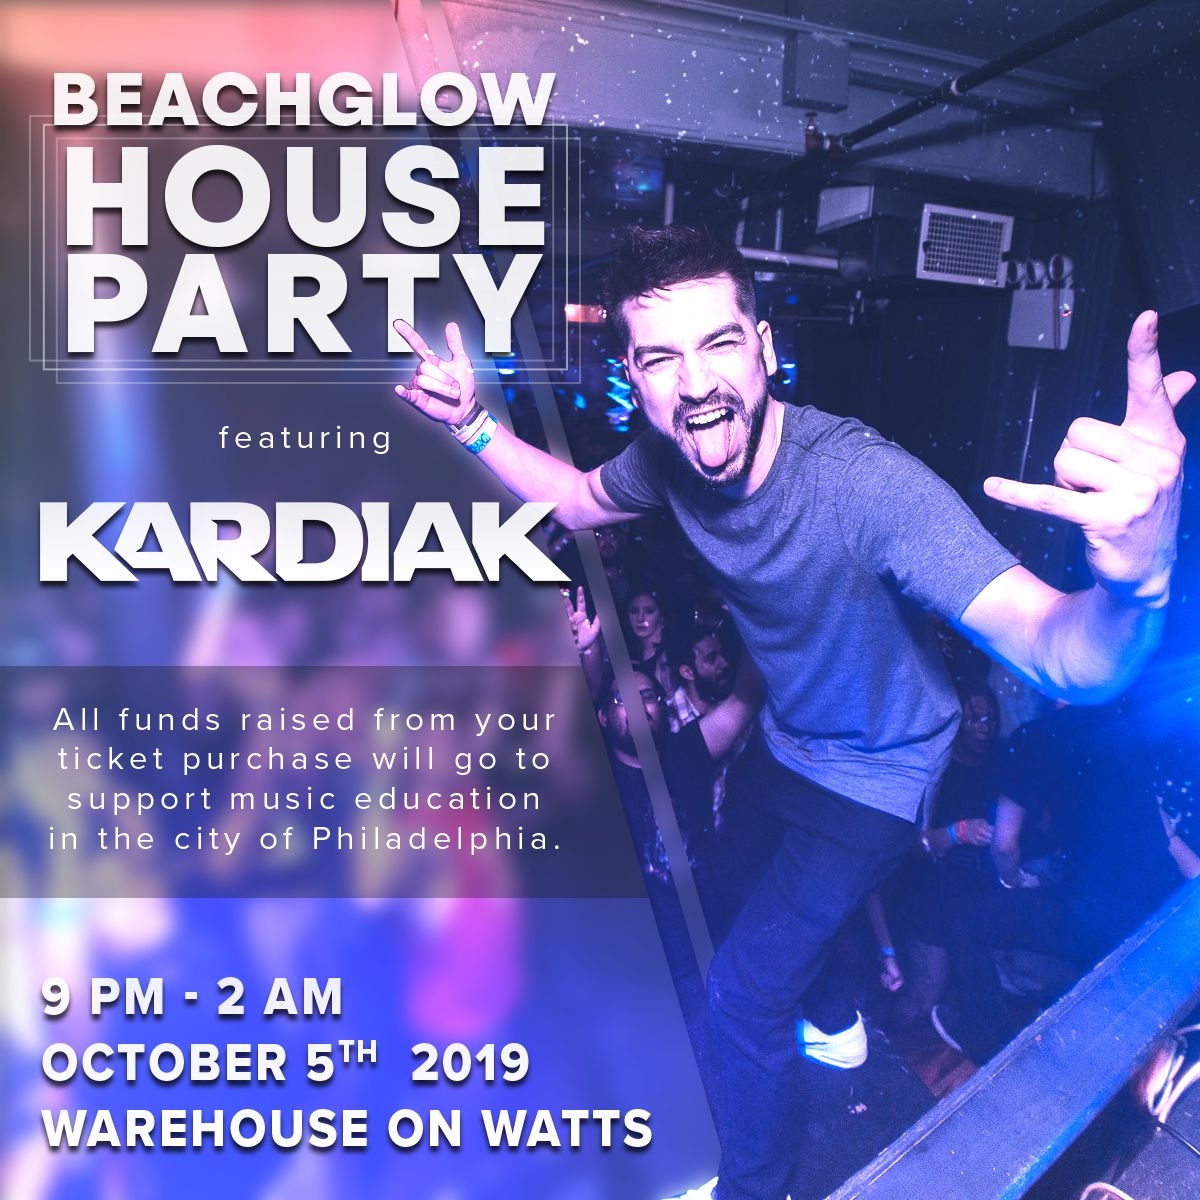 Beachglow House Party flyer.